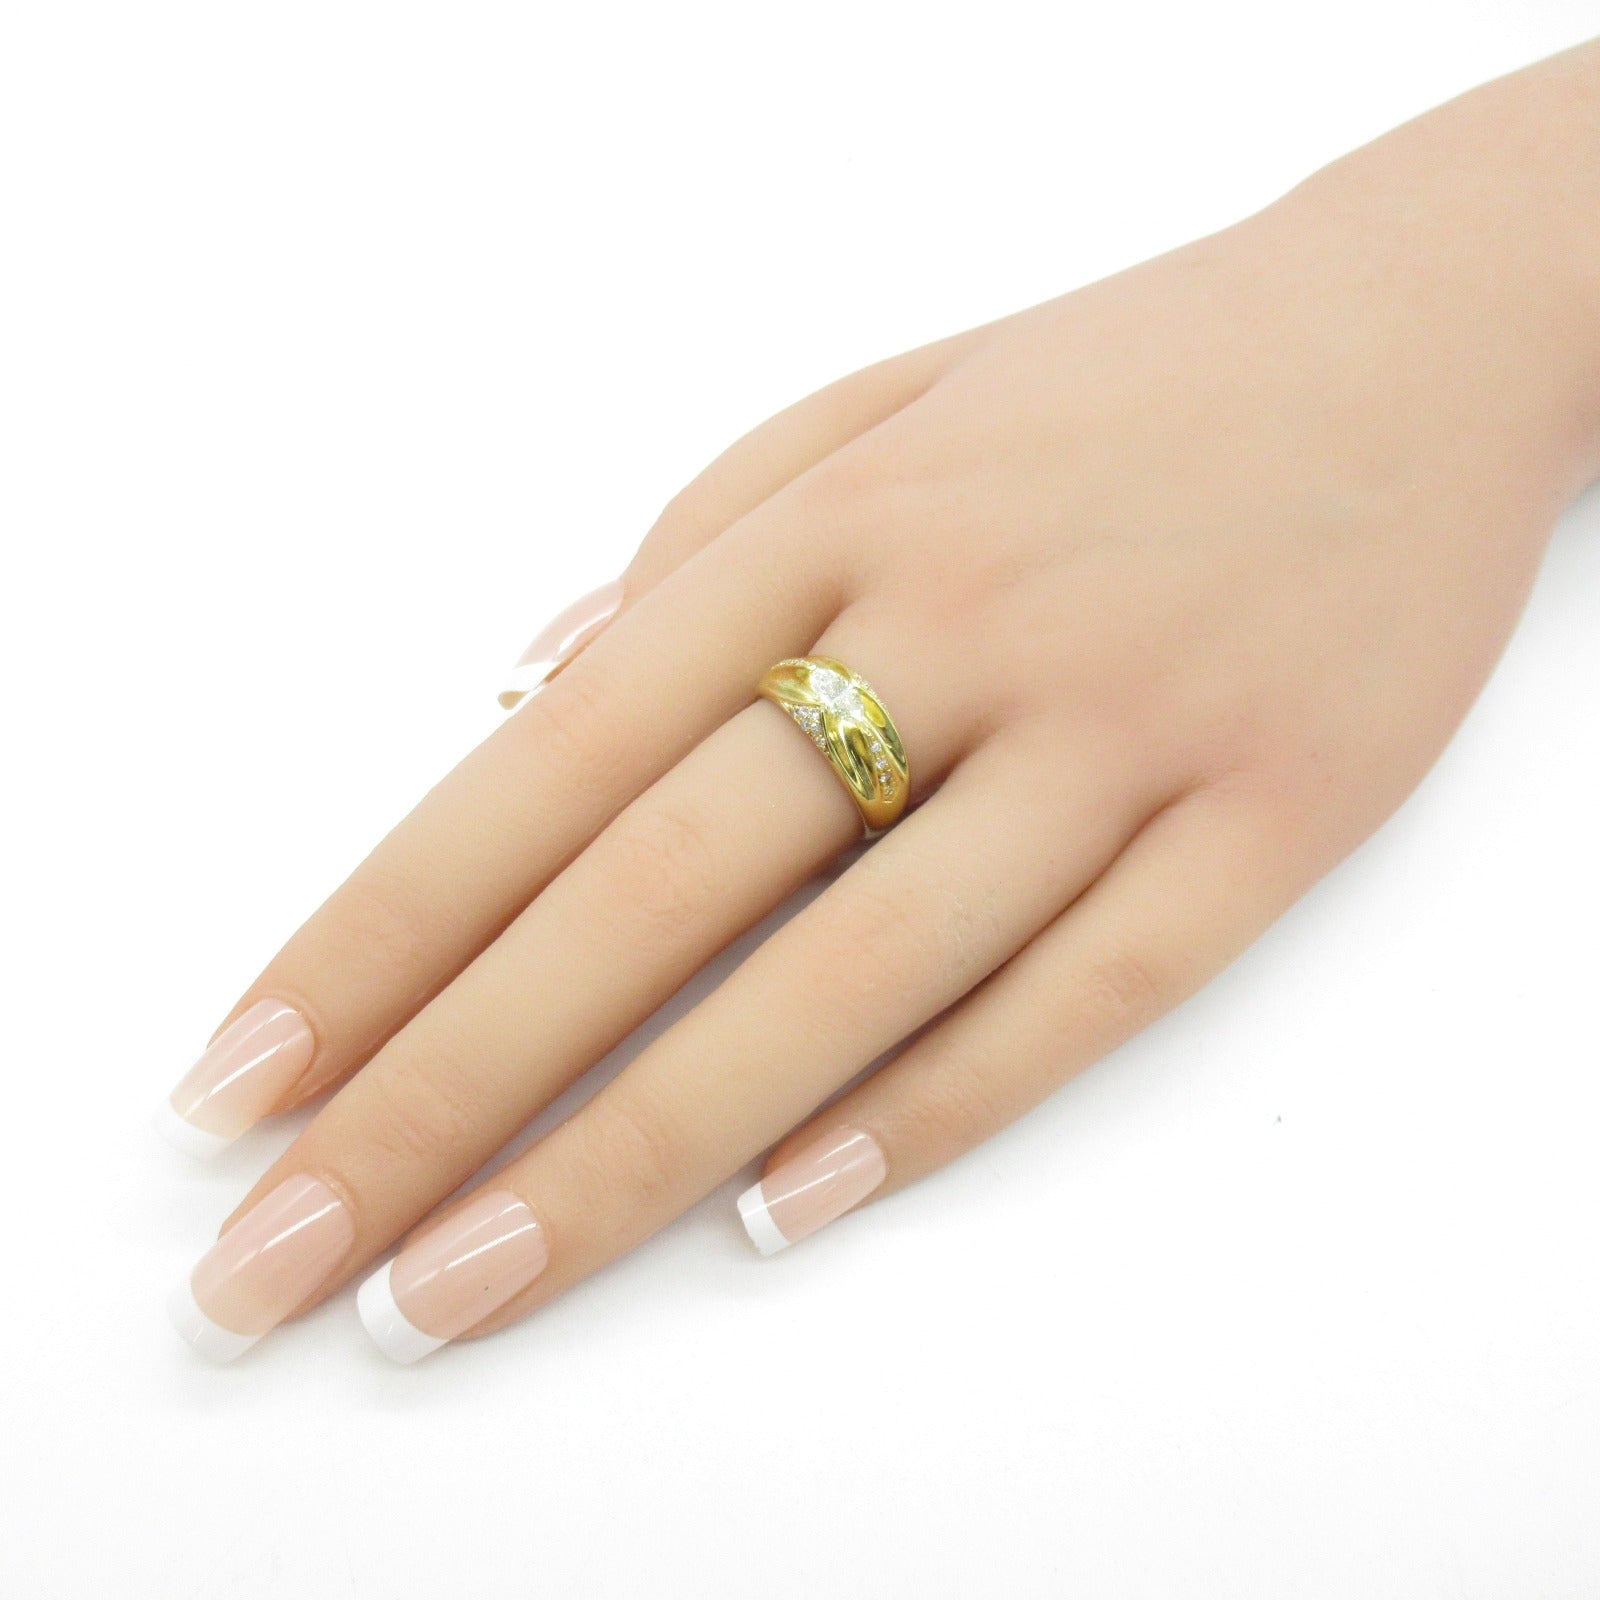 Jewelry Jewelry Diamond Ring Ring Ring Jewelry K18 (Yellow G) Diamond  Clear Diamond 8.2g